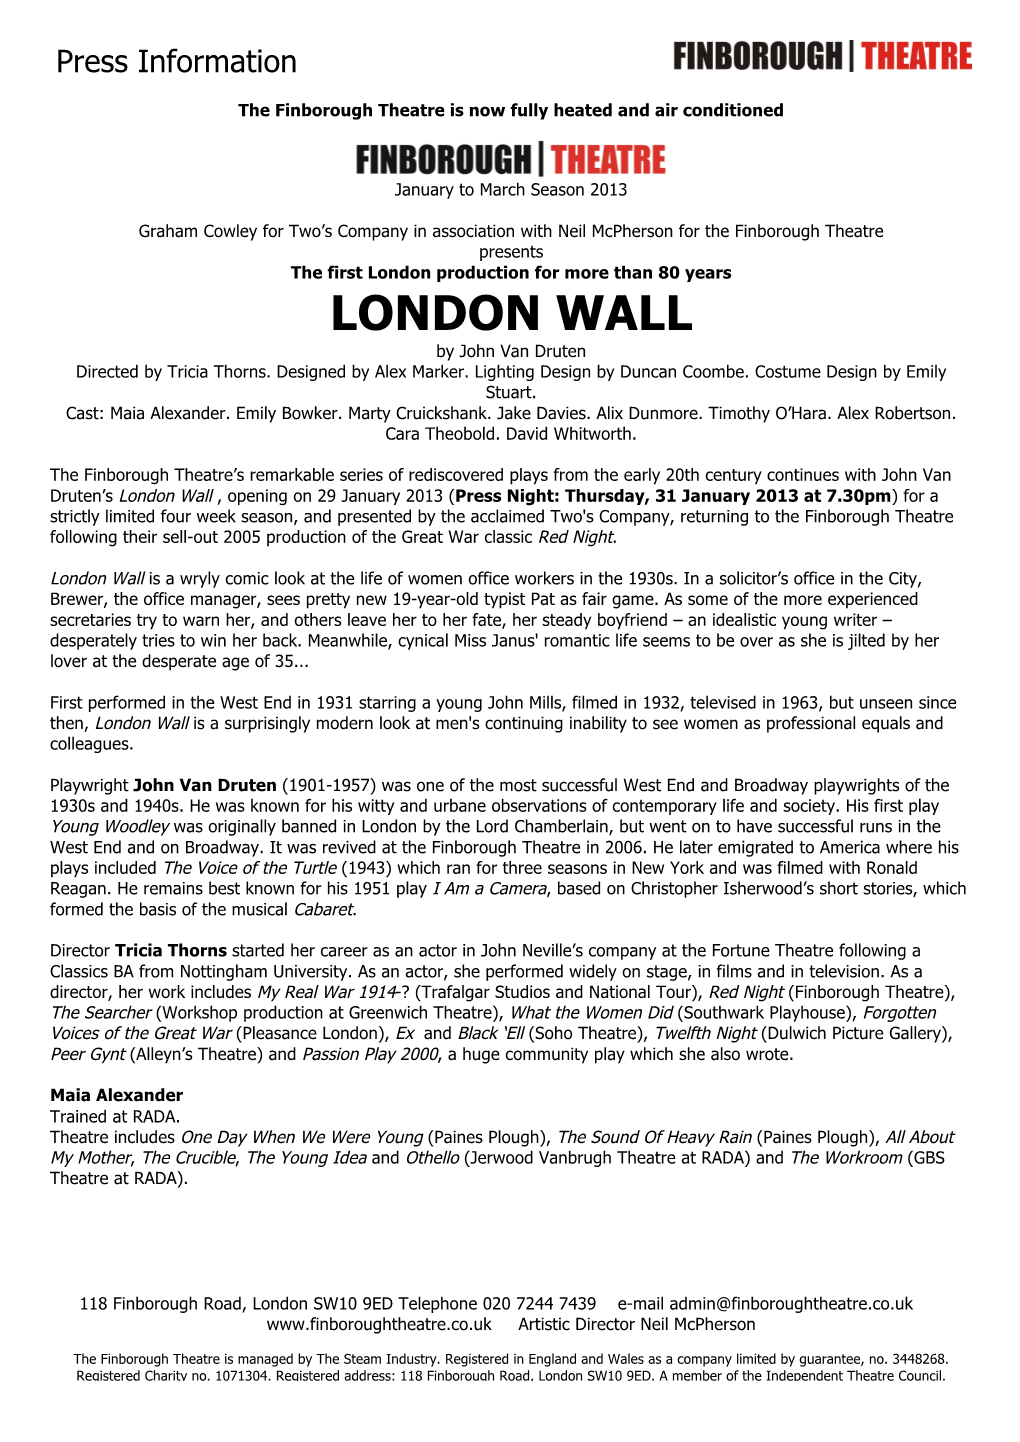 LONDON WALL by John Van Druten Directed by Tricia Thorns